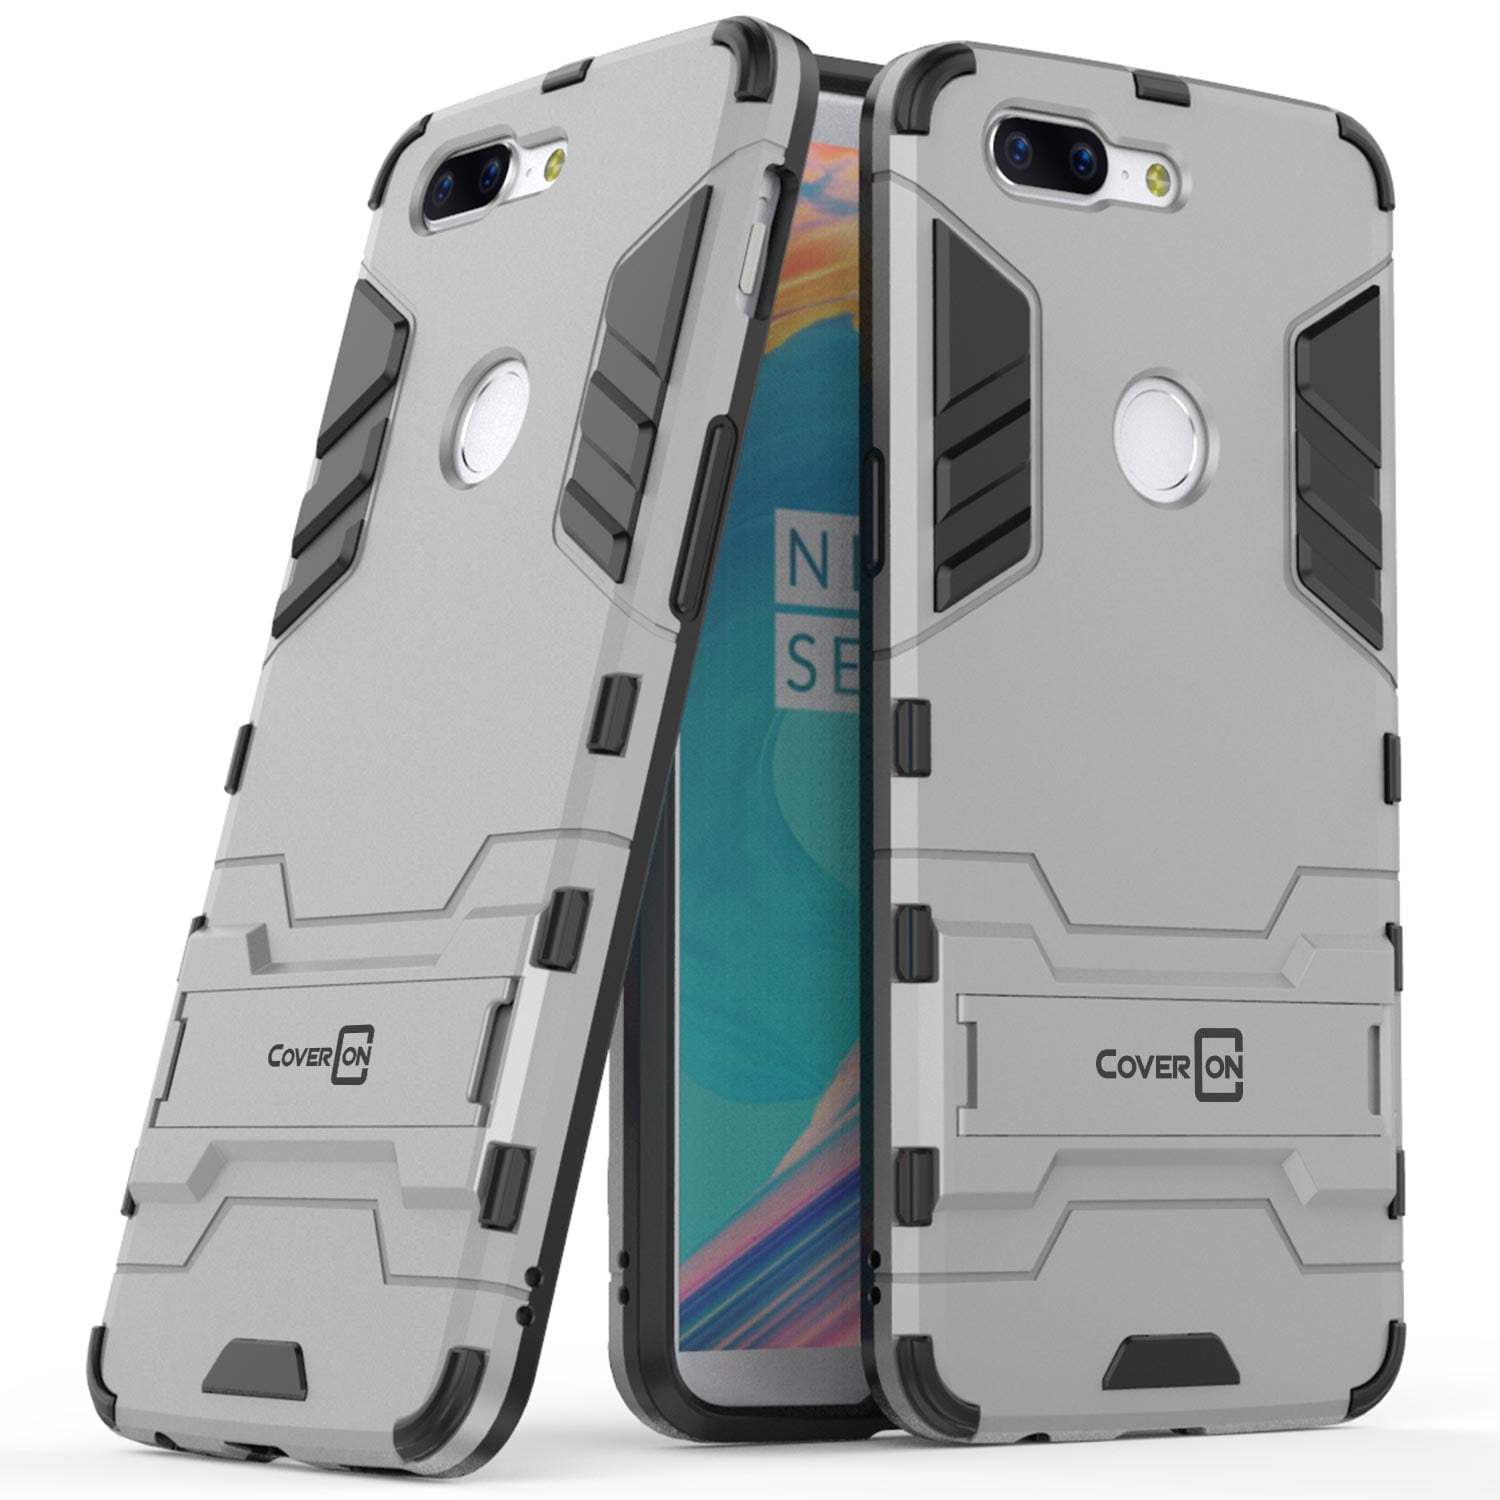 Empire genetically blood CoverON OnePlus 5T Case, Shadow Armor Series Hybrid Kickstand Phone Cover -  Walmart.com